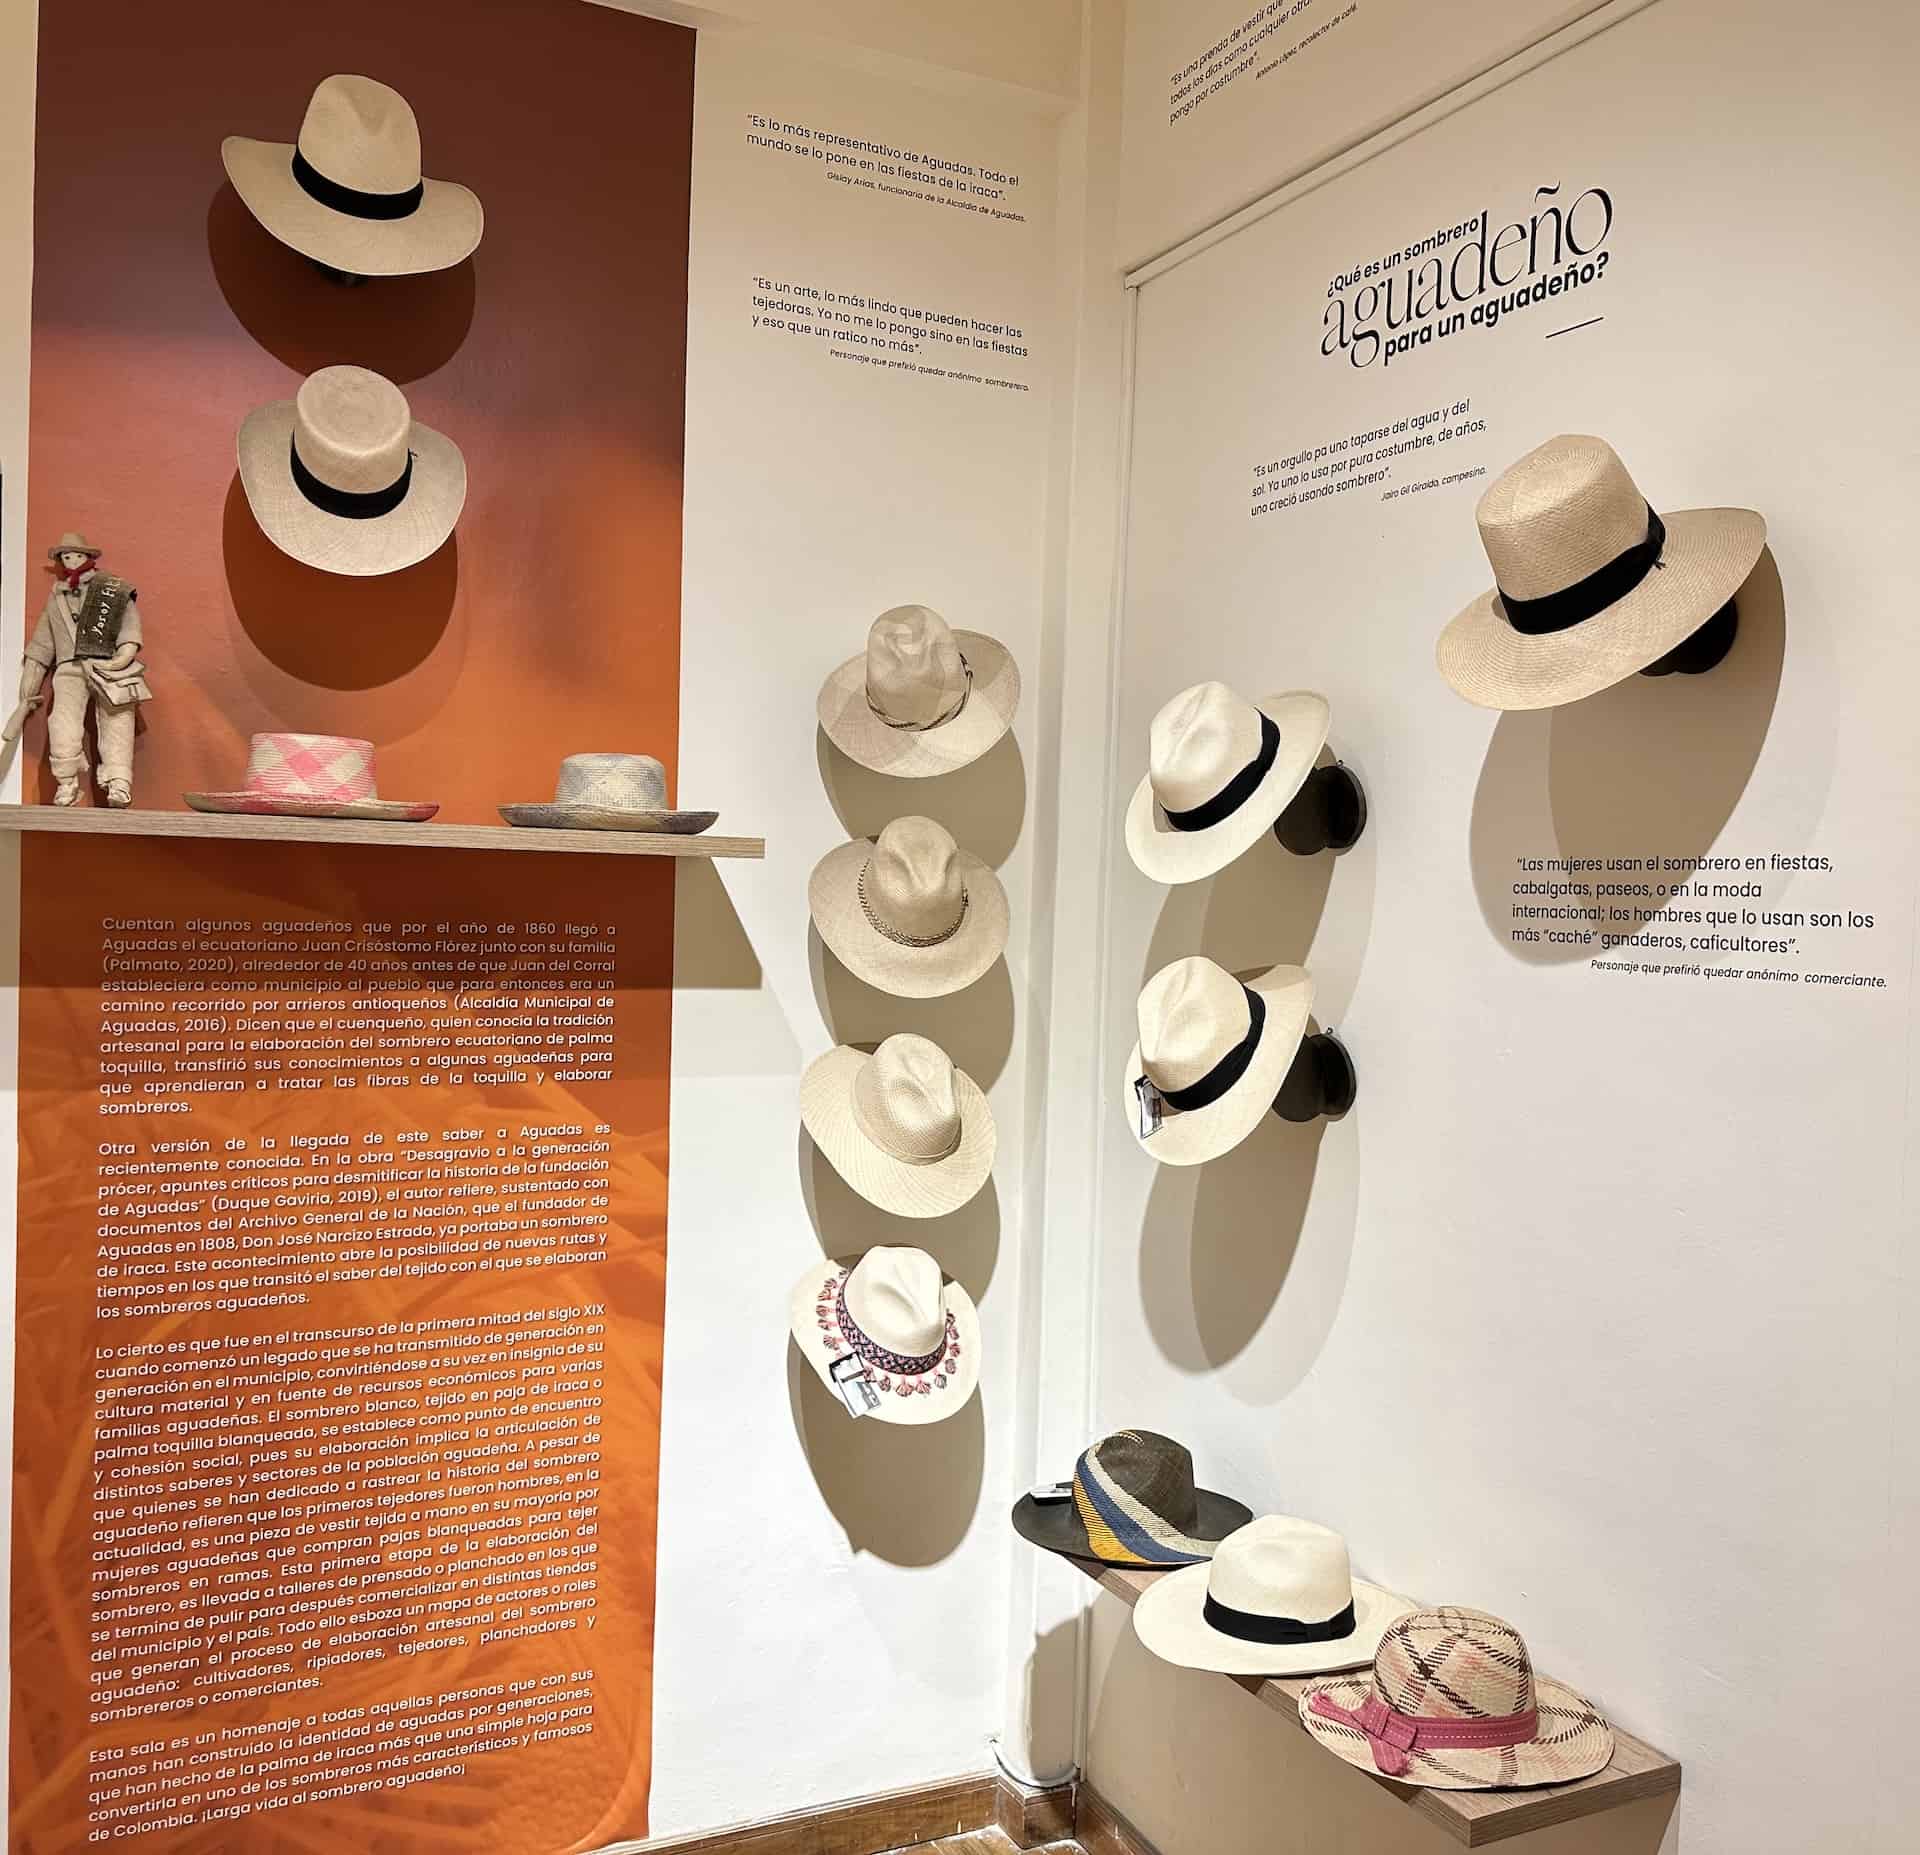 Sombrero aguadeño at the National Museum of Hats at the Francisco Giraldo Cultural Center in Aguadas, Caldas, Colombia